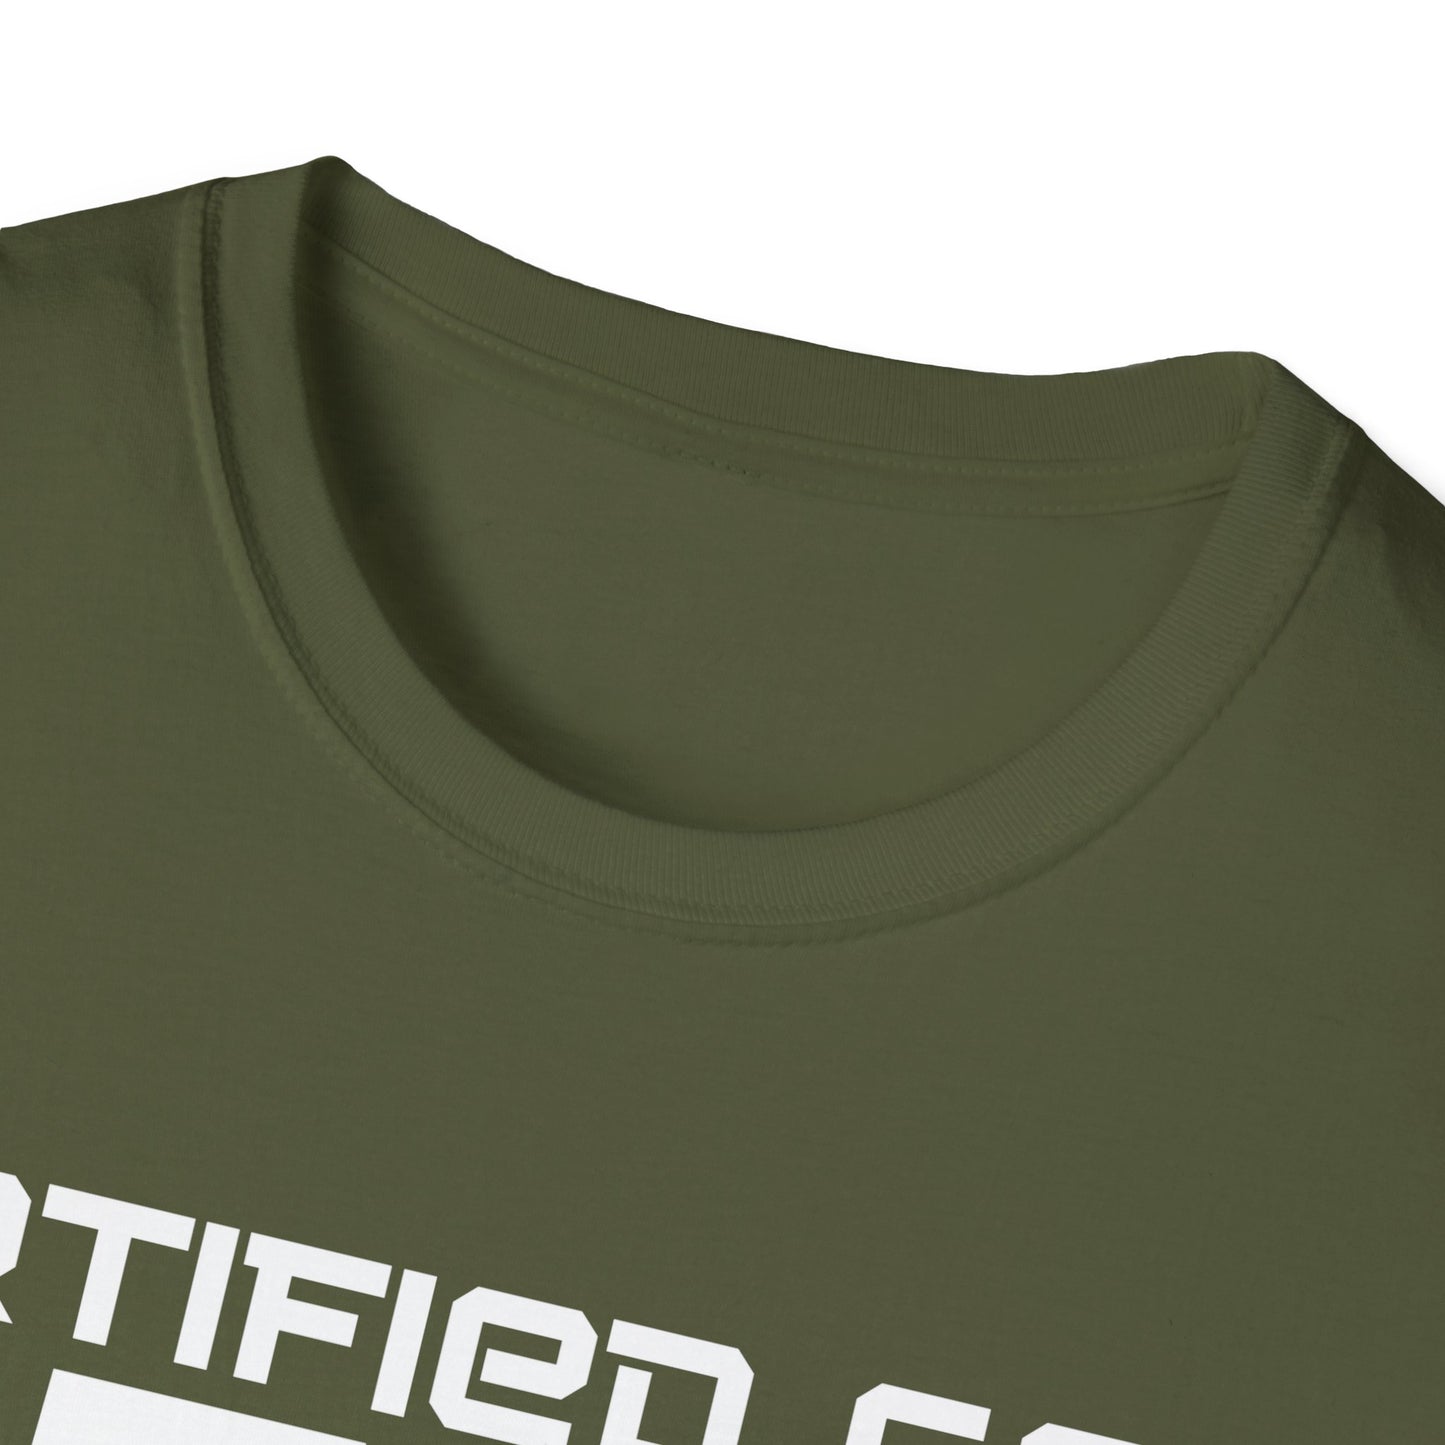 Certified Geek WAP White Font Unisex Softstyle T-Shirt